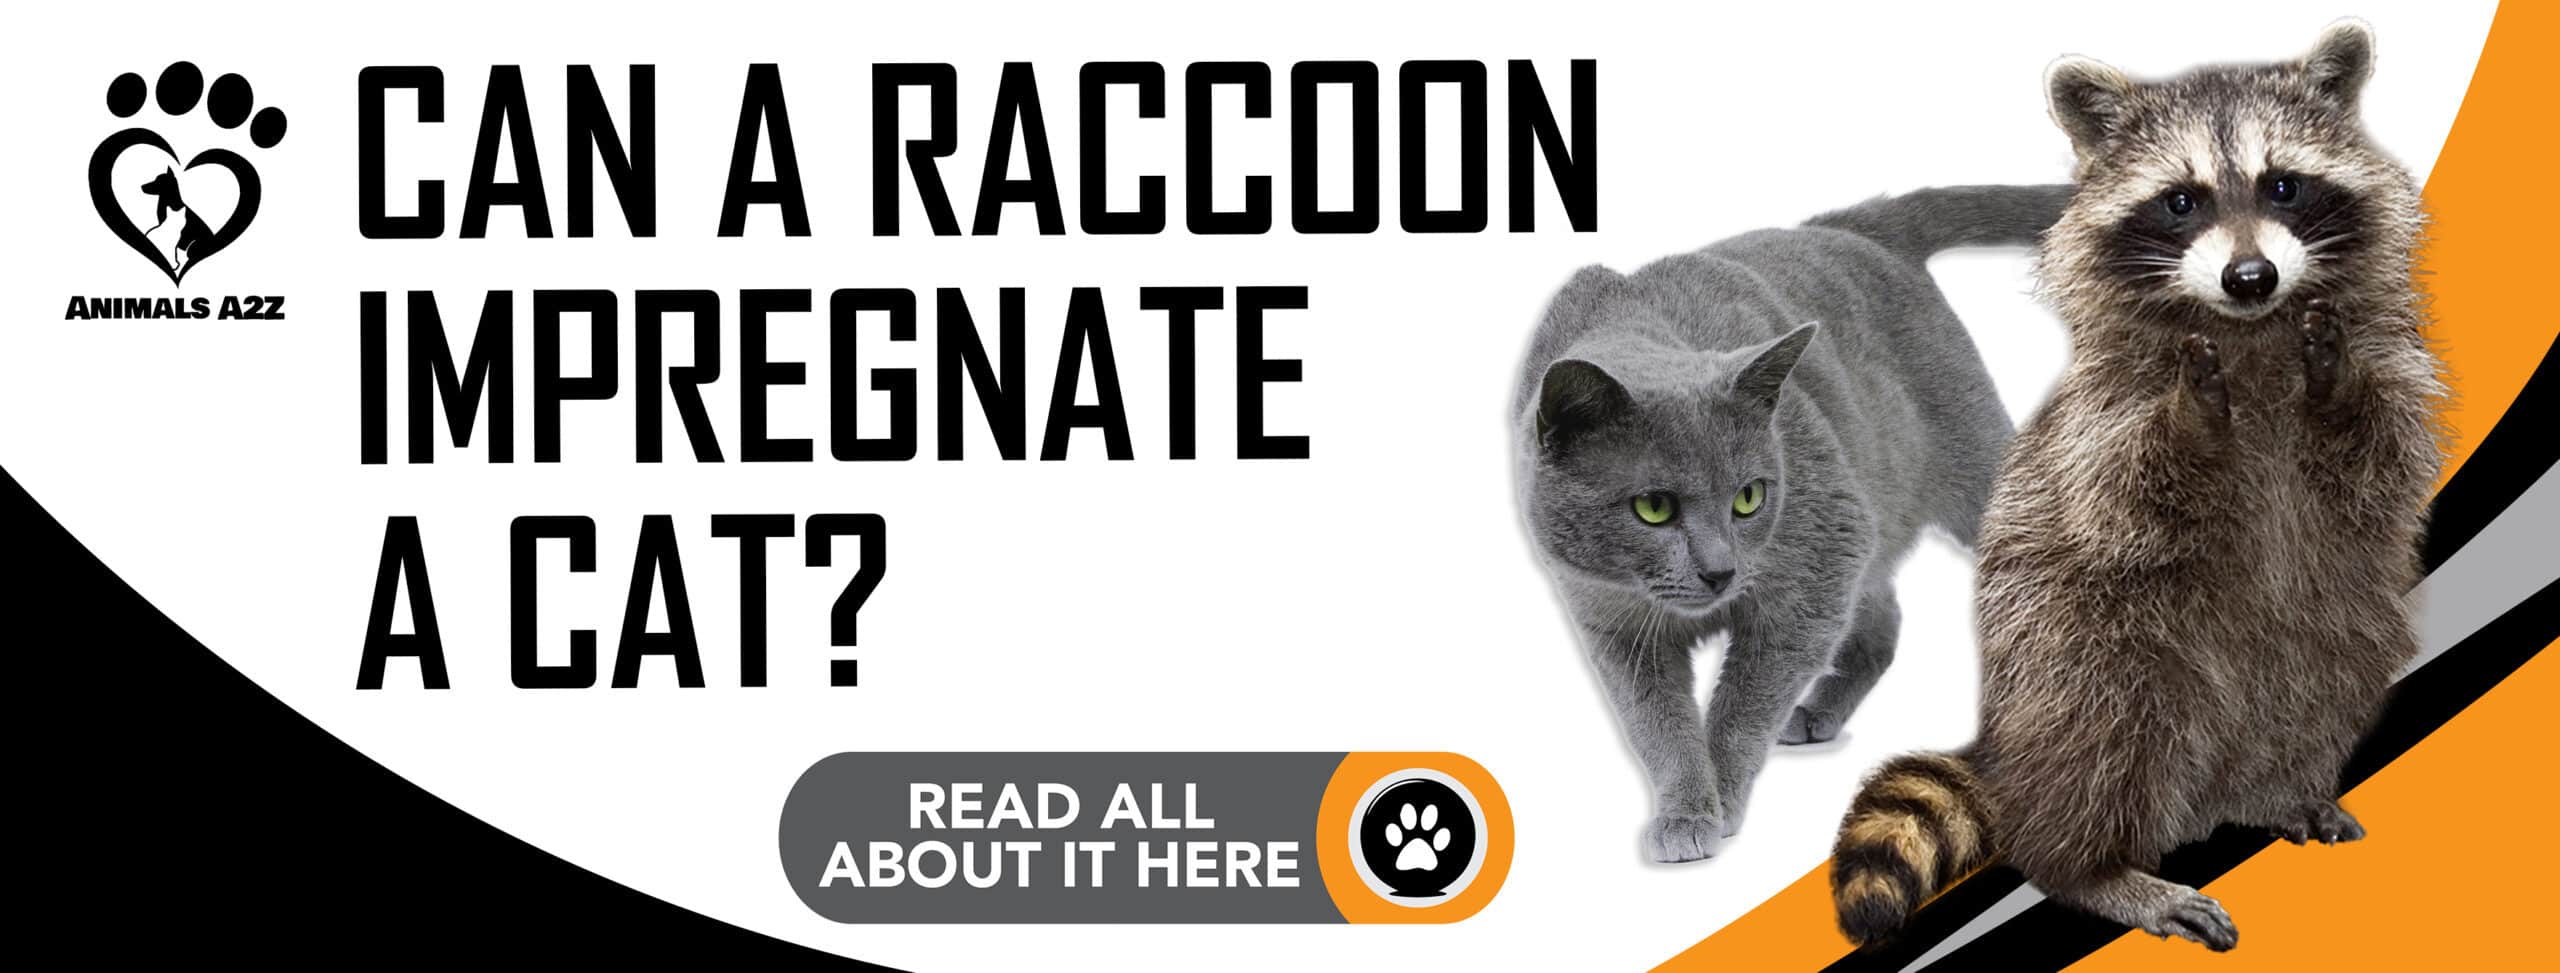 Can a raccoon impregnate a cat?